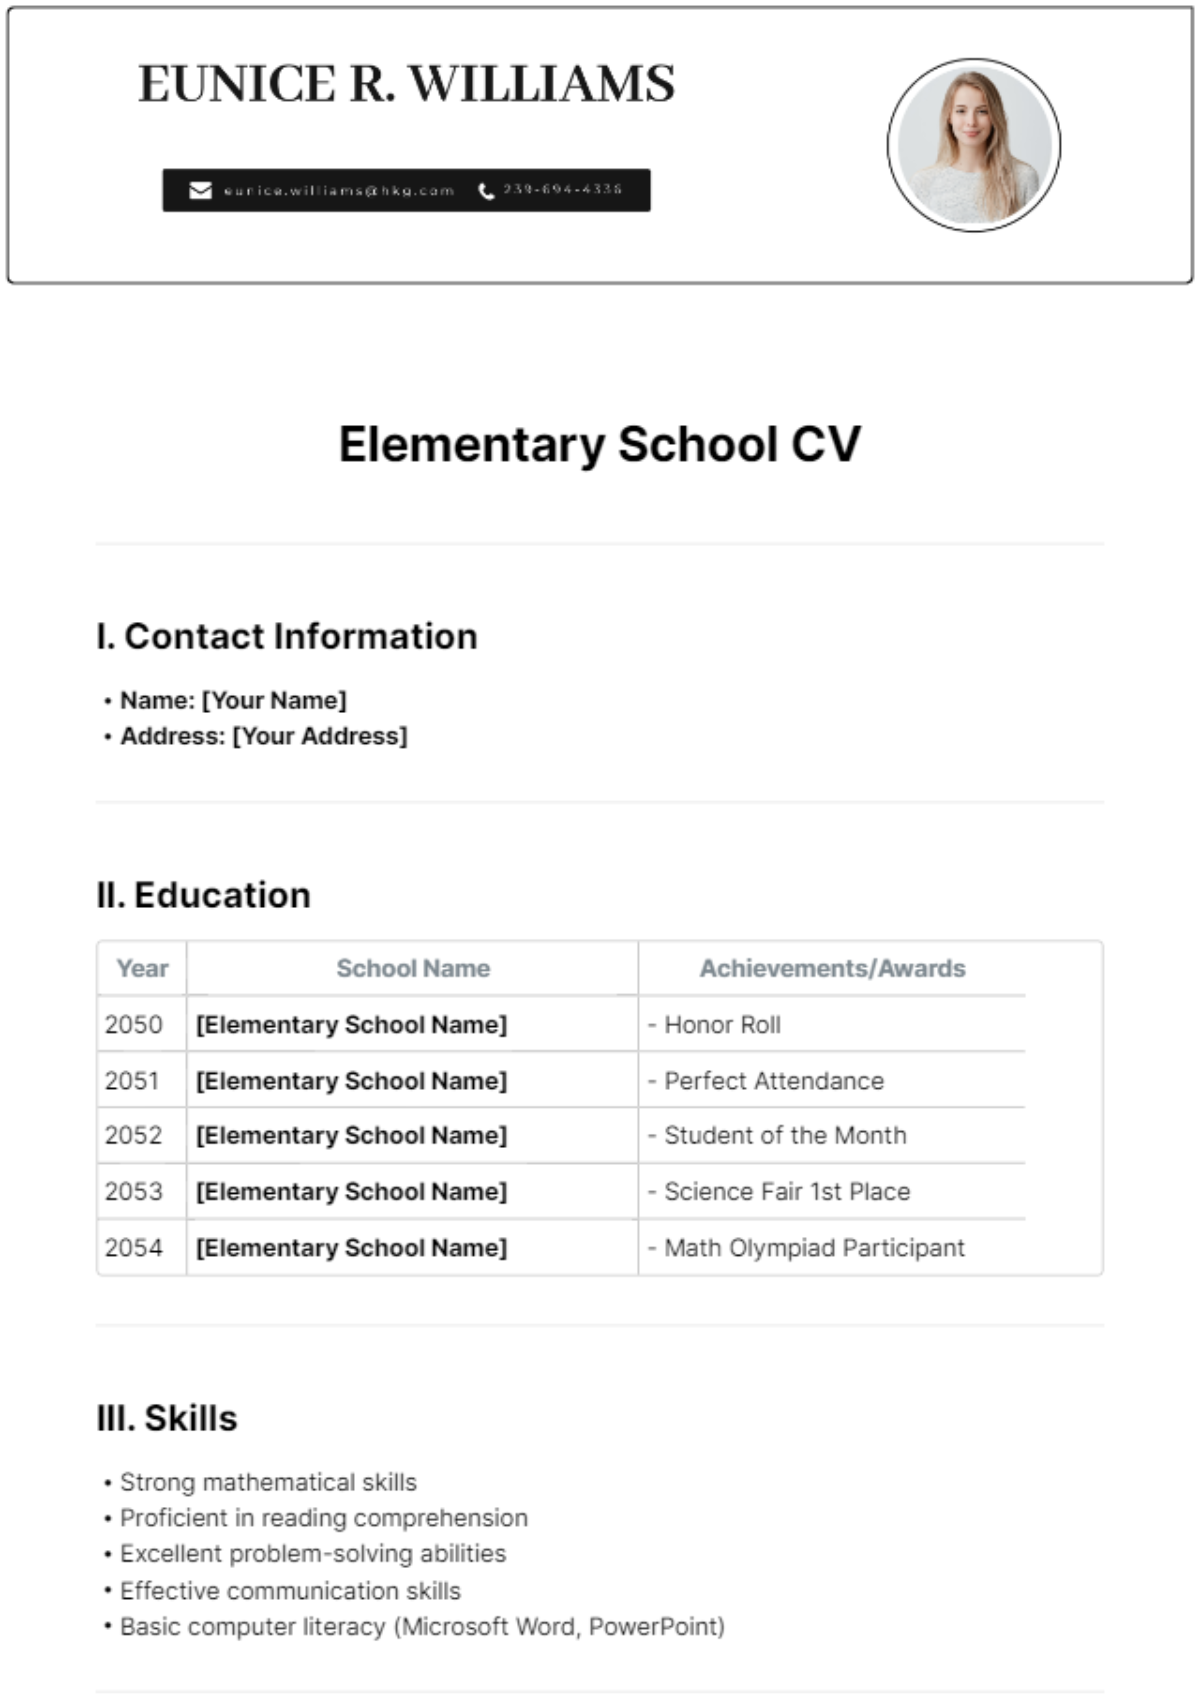 Elementary School CV Template